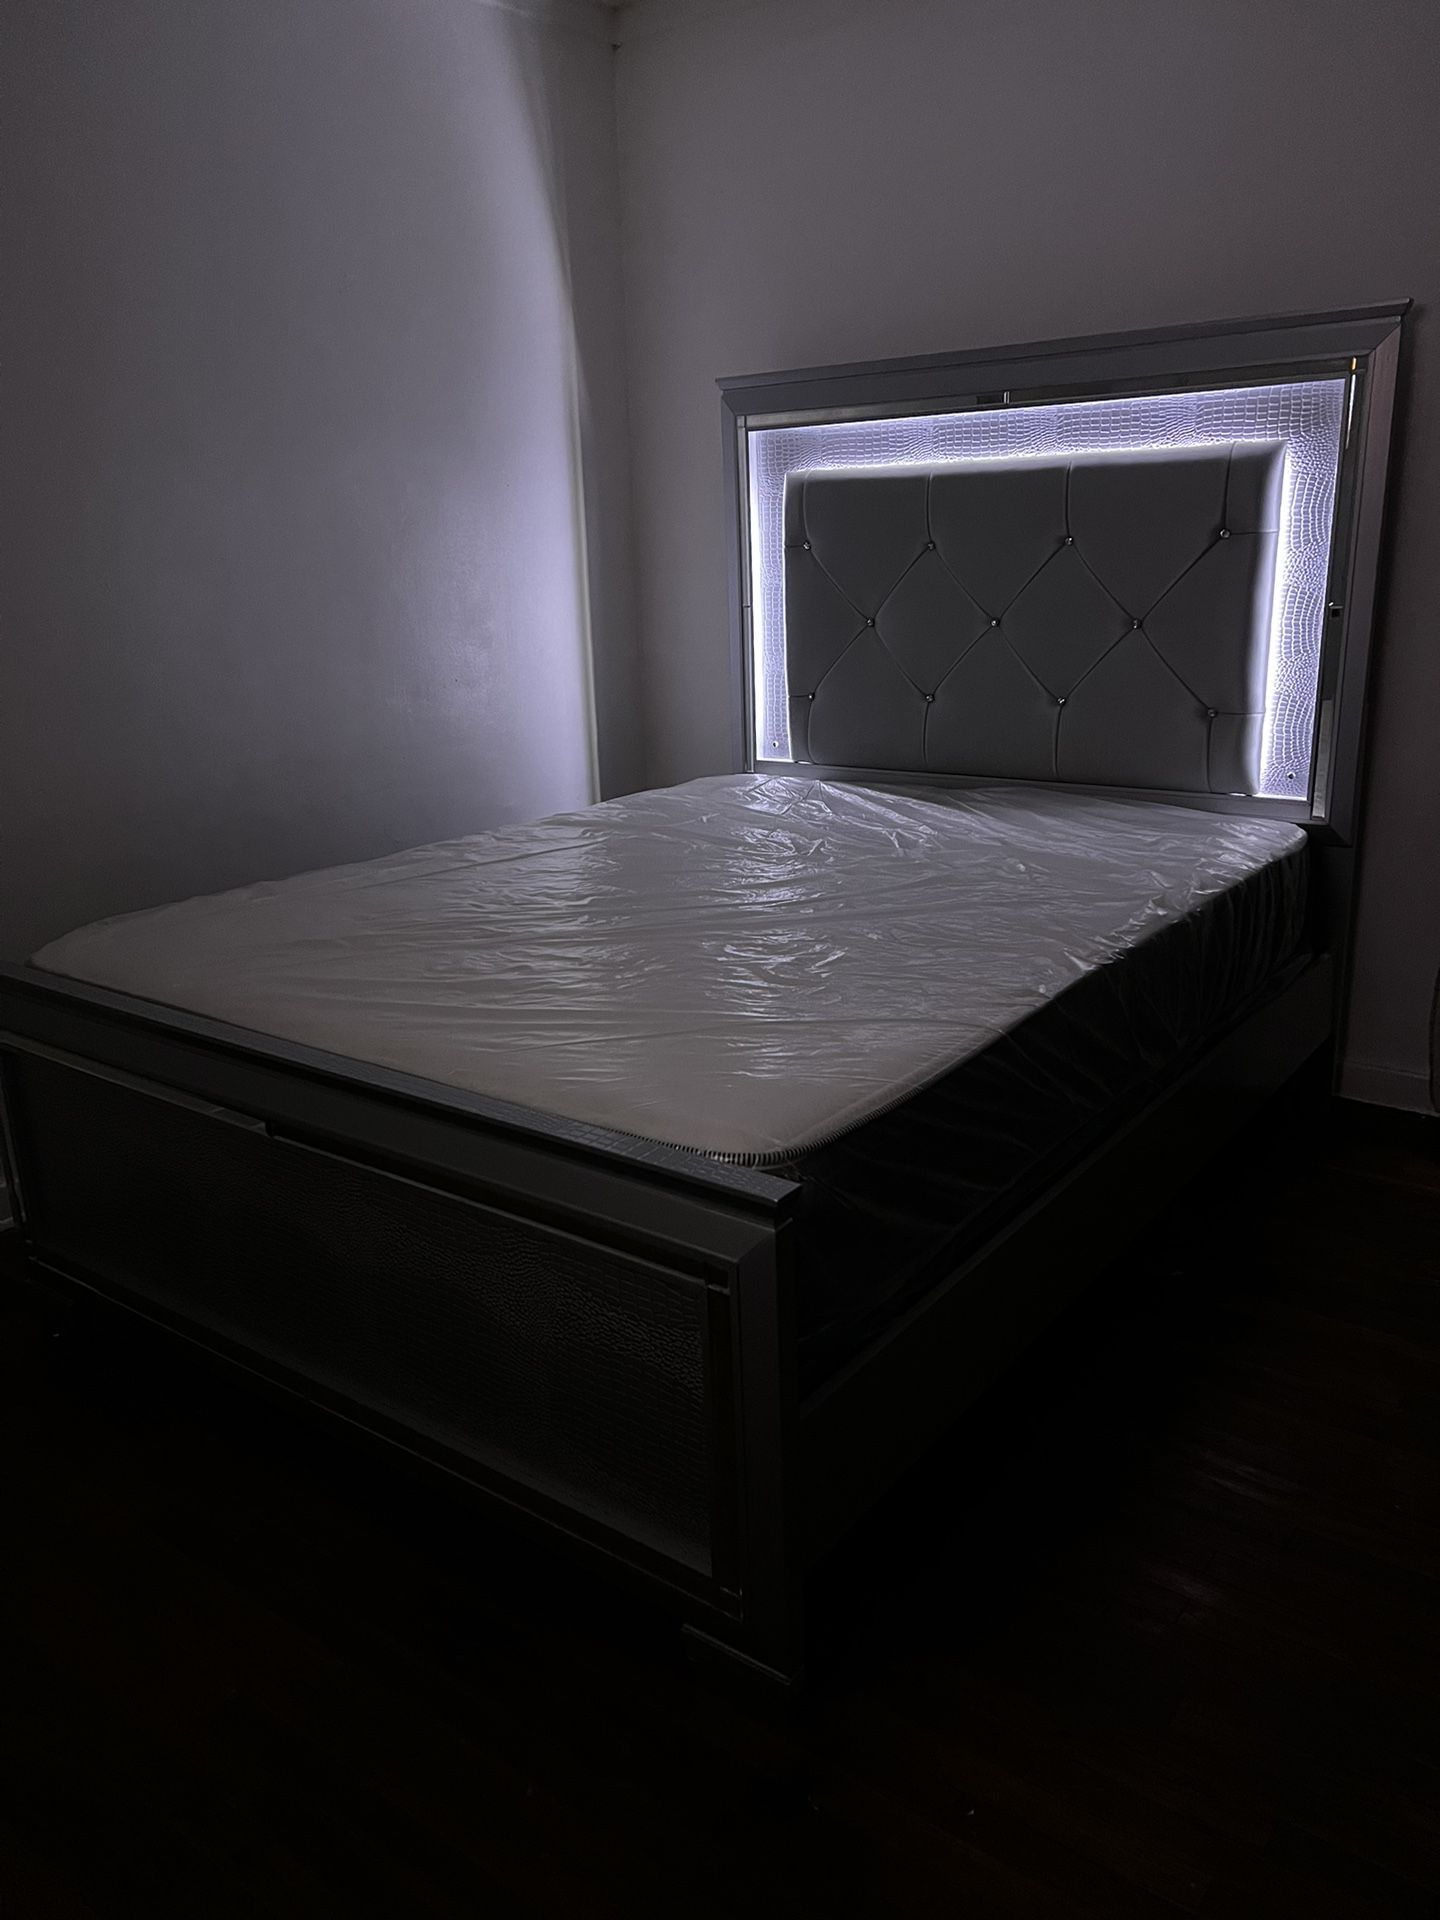 LED Mirror Bed Frame